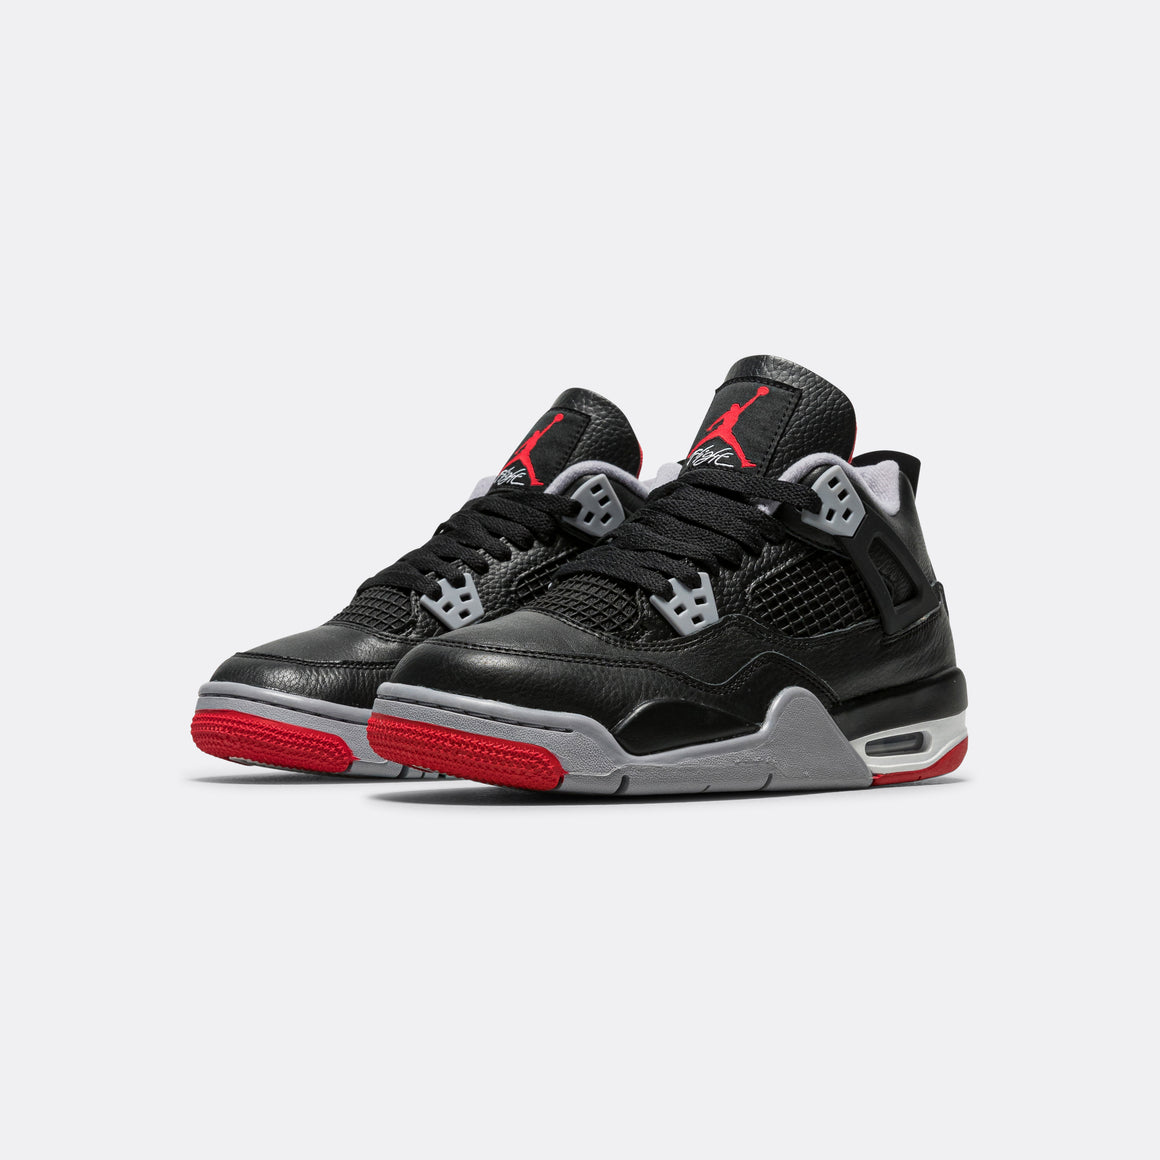 Jordan - Air Jordan 4 Retro (GS) - Black/Fire-Red Cement Grey - UP THERE